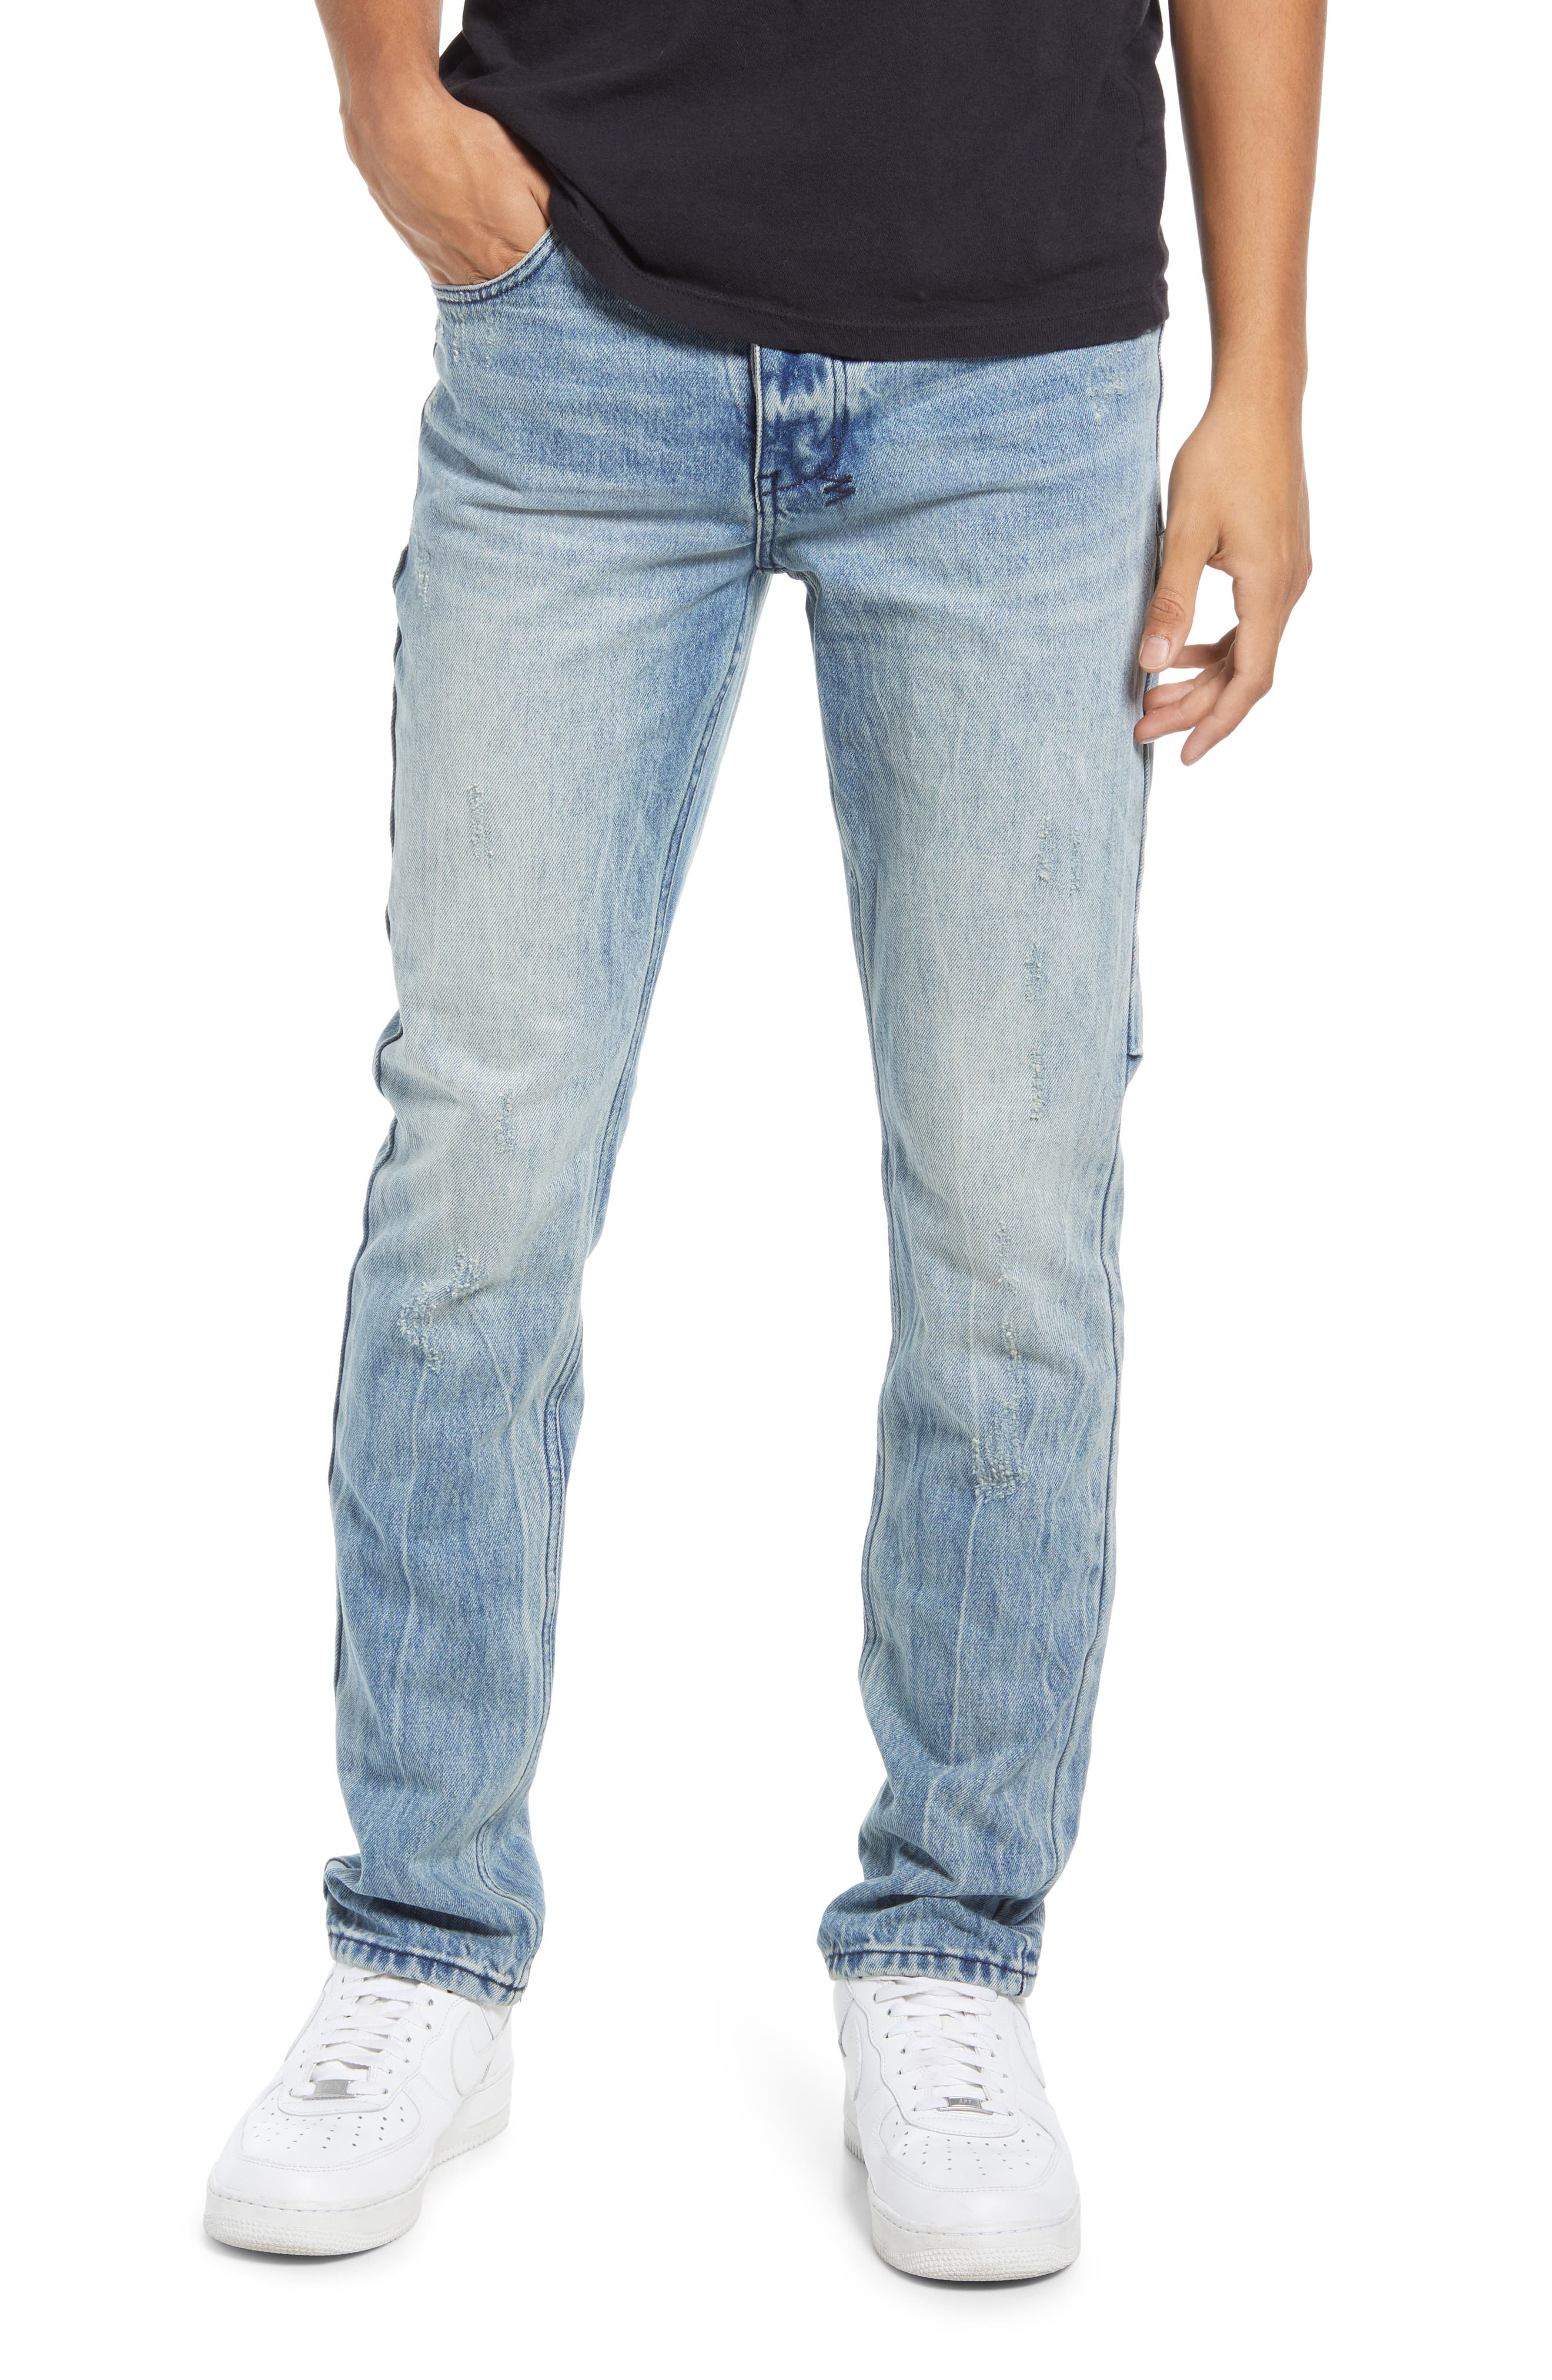 Ksubi Chitch Authentik Skinny Fit Jeans in Denim at Nordstrom, Size 33 X 32